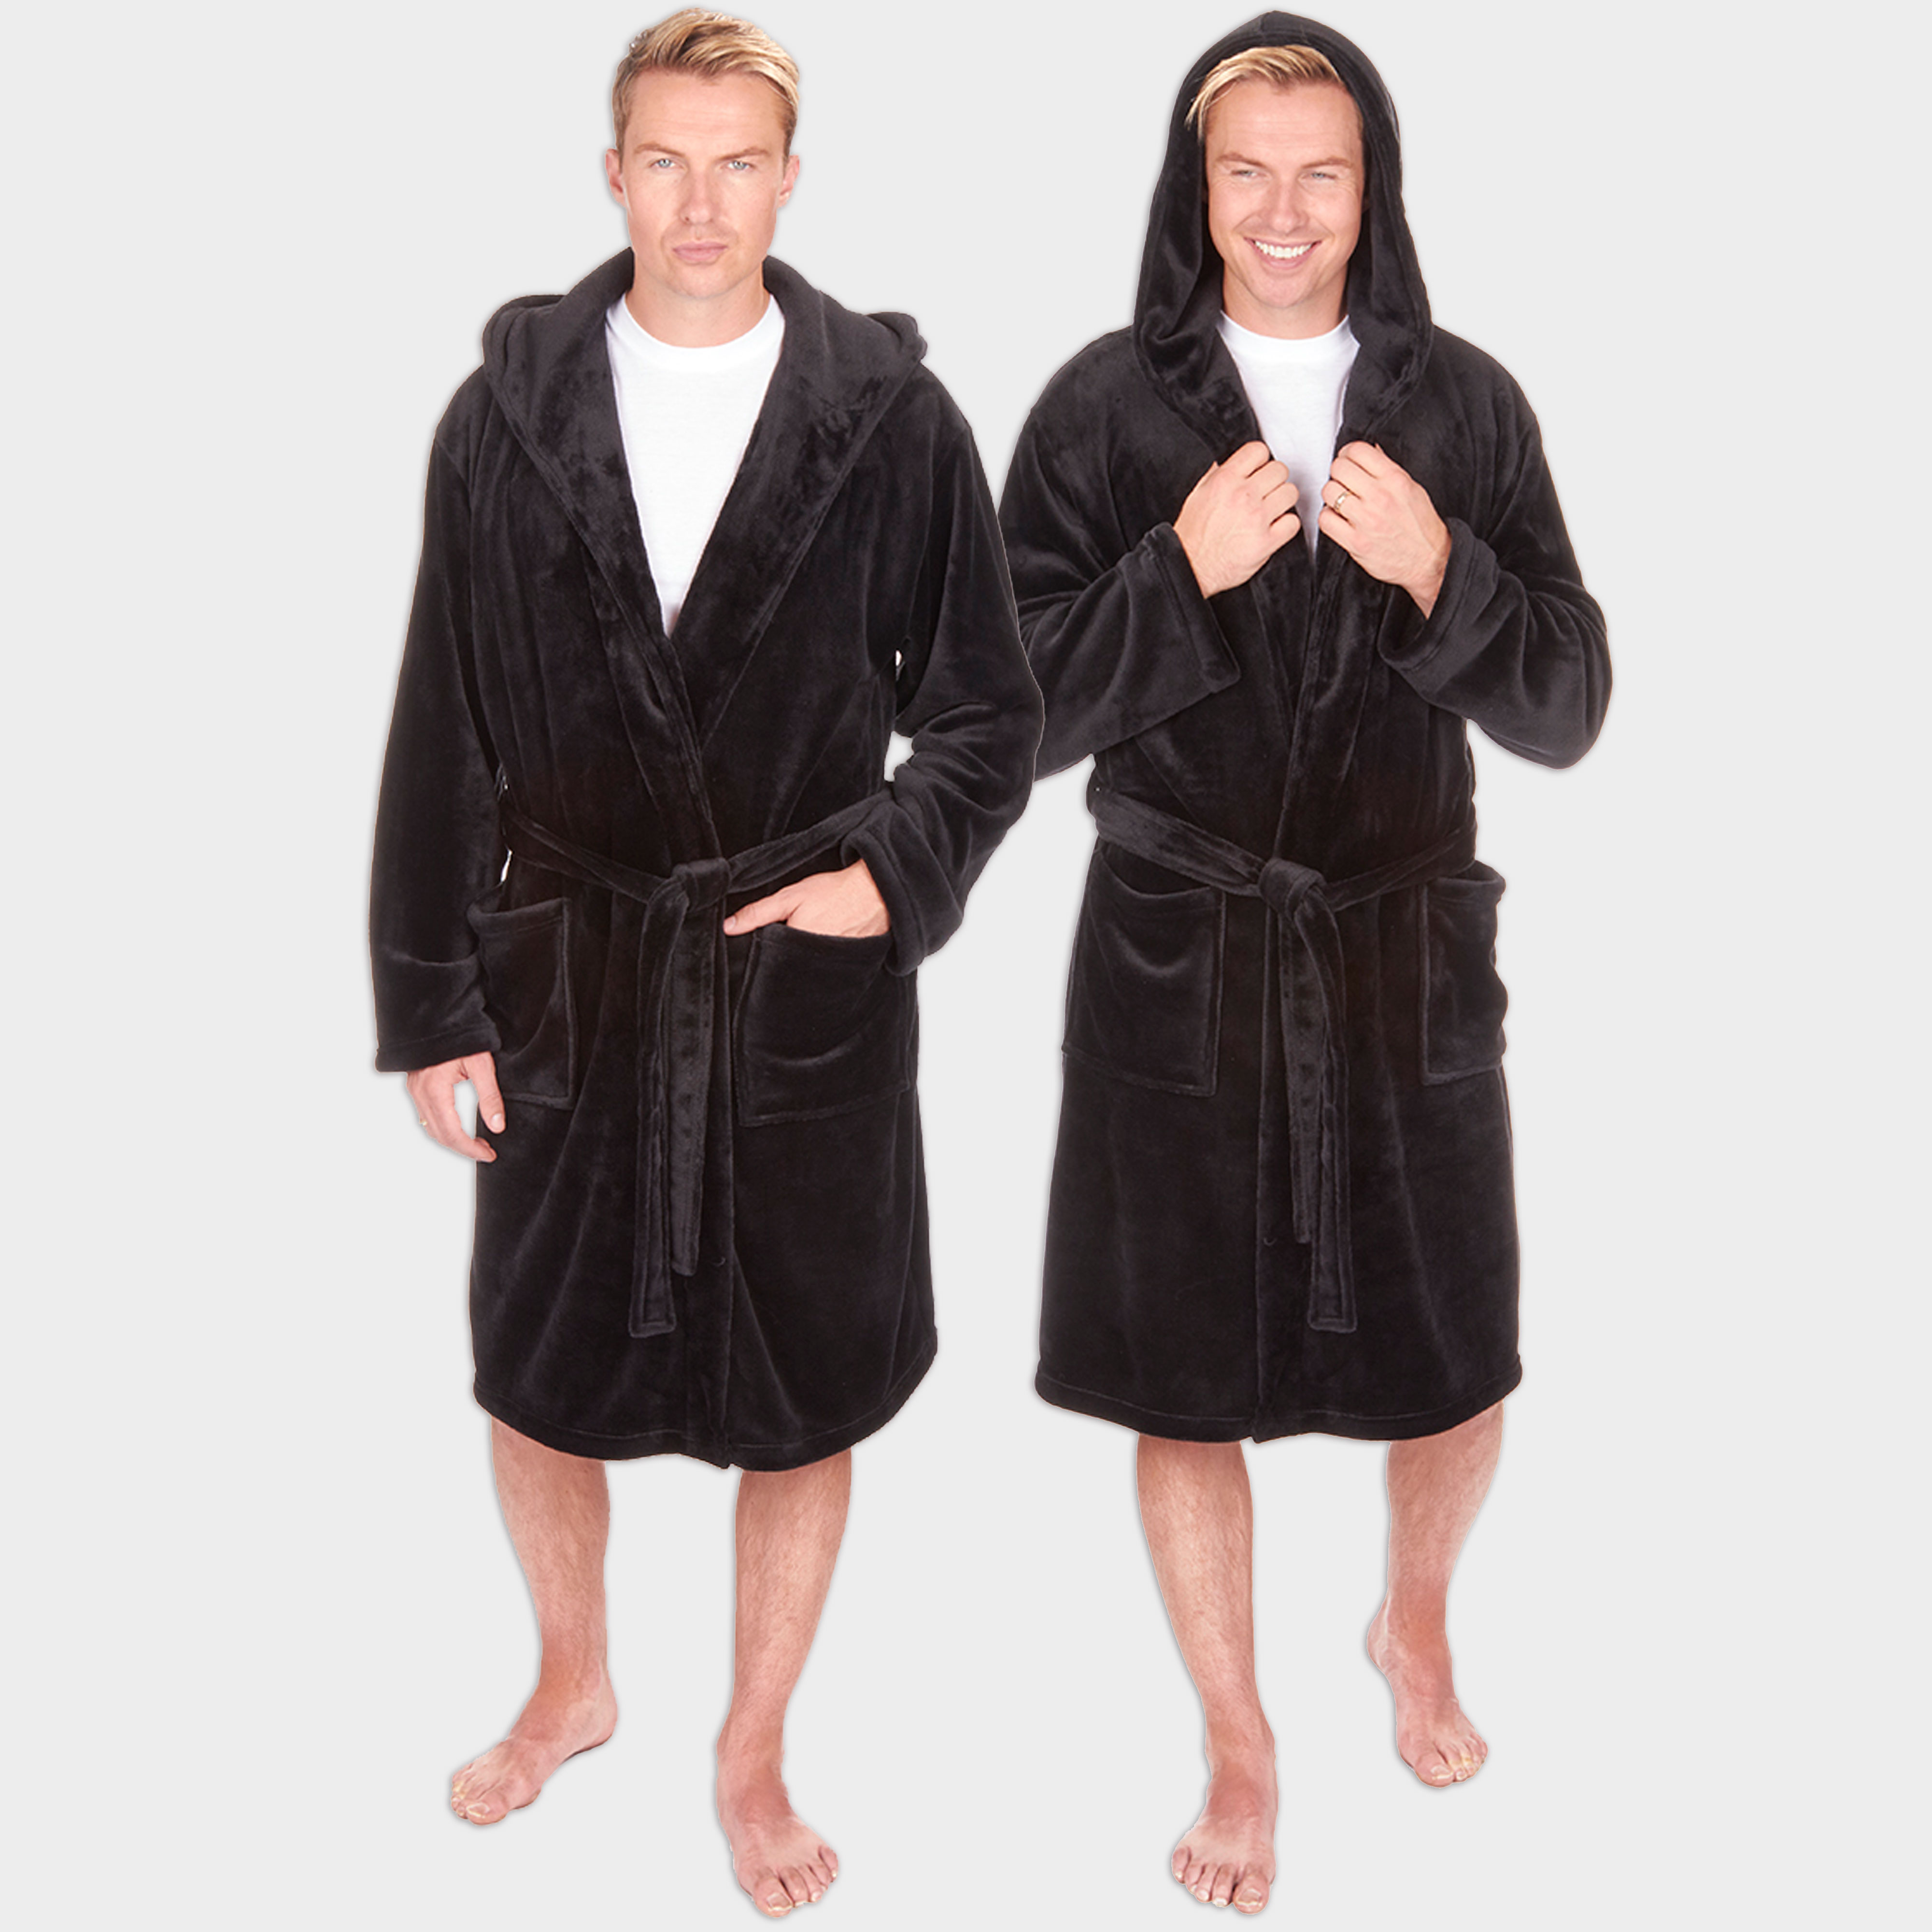 Pierre Roche Mens Big & Tall Snuggle Fleece Dressing Gown Sizes 3Xl-5XL Plush Bath Robe with Hood 